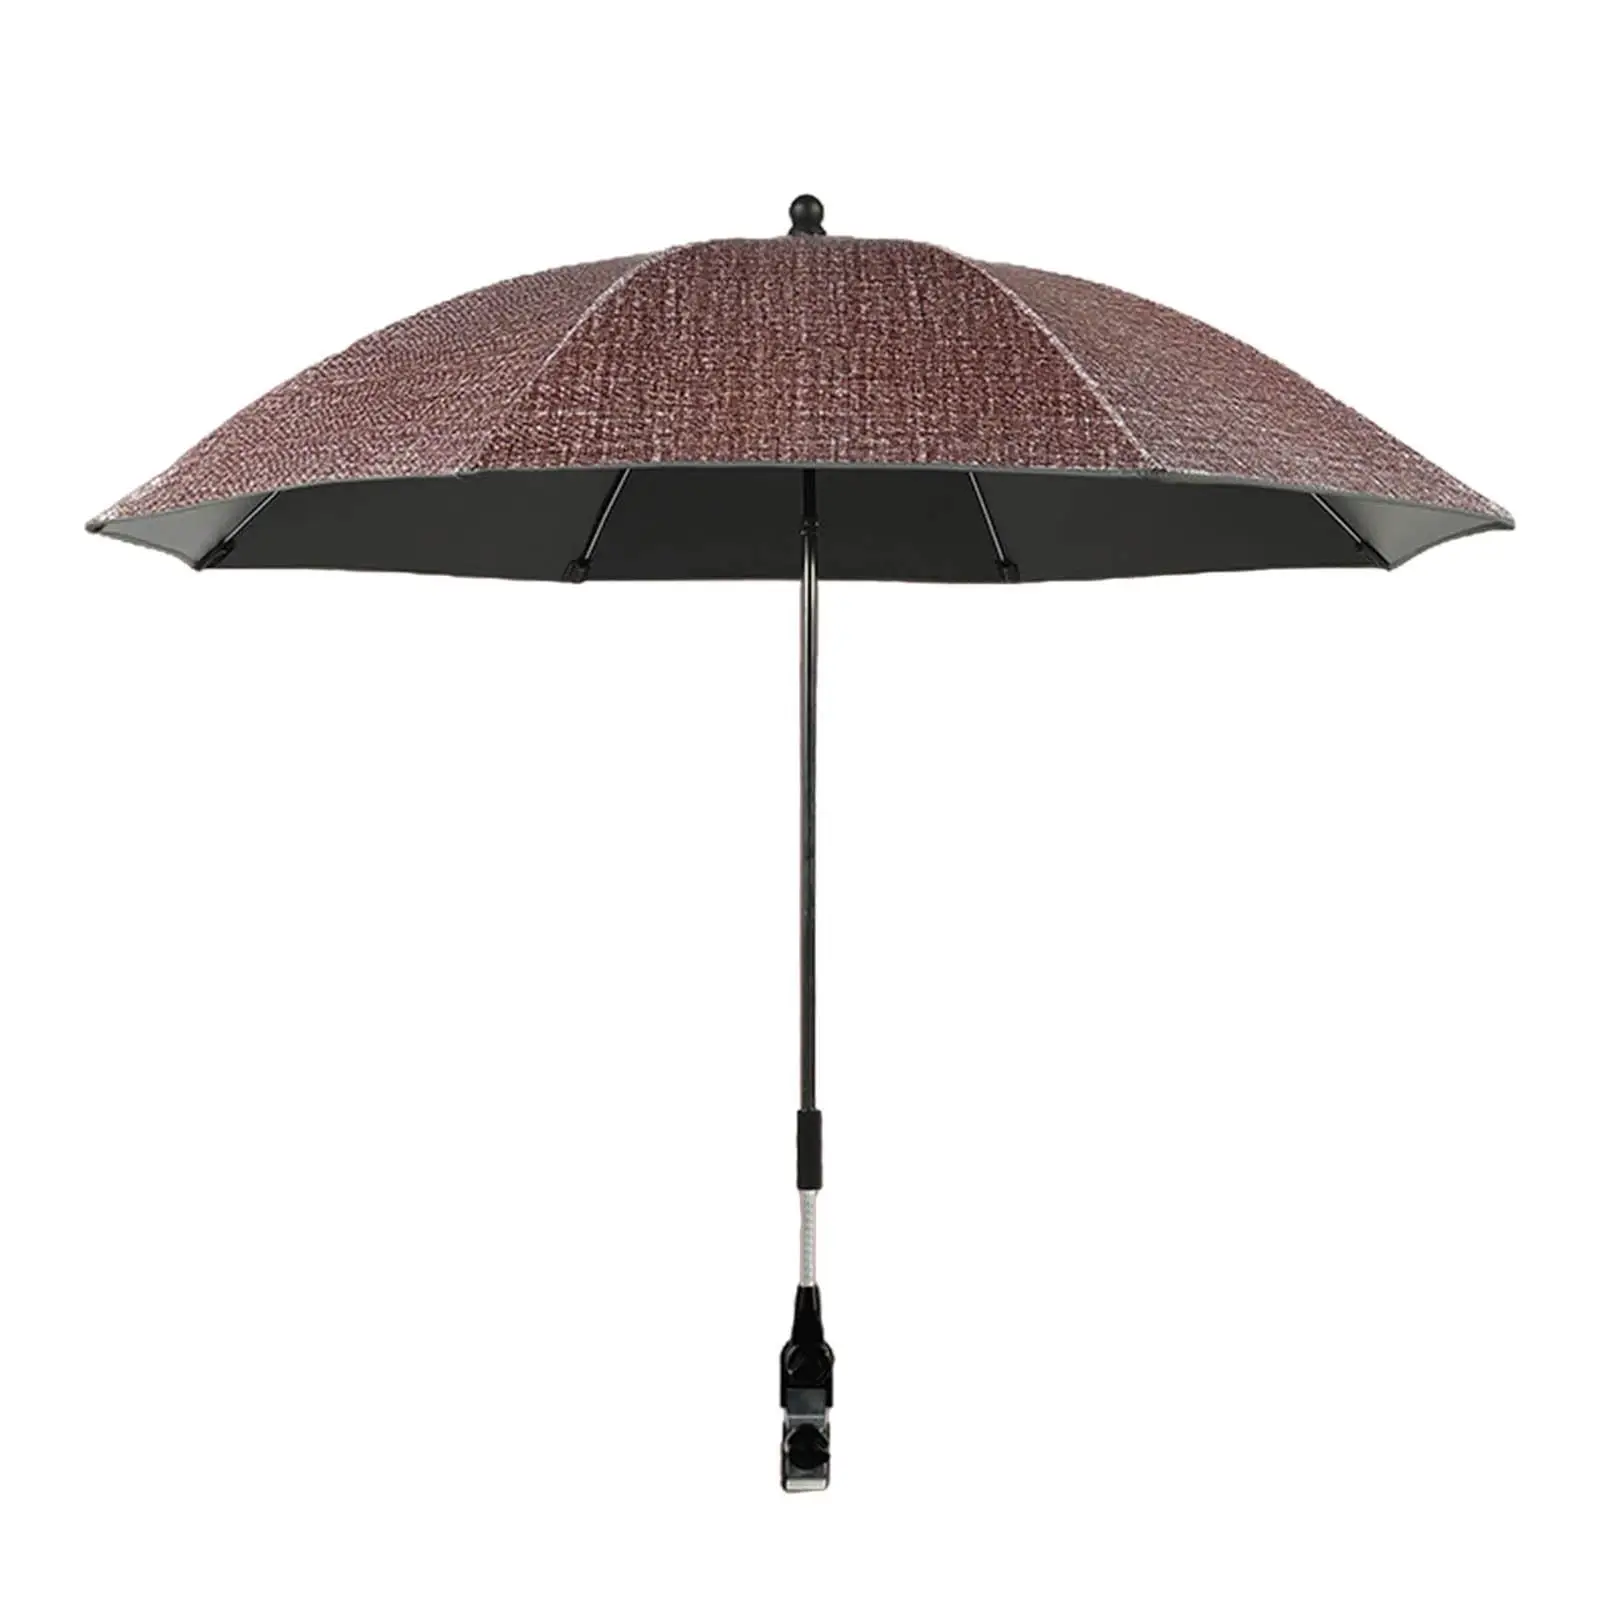 Parasol for Baby Pushchair/Buggy/Stroller/Pram/Jogger Kids Garden Umbrella Universal Sunshade Cover 